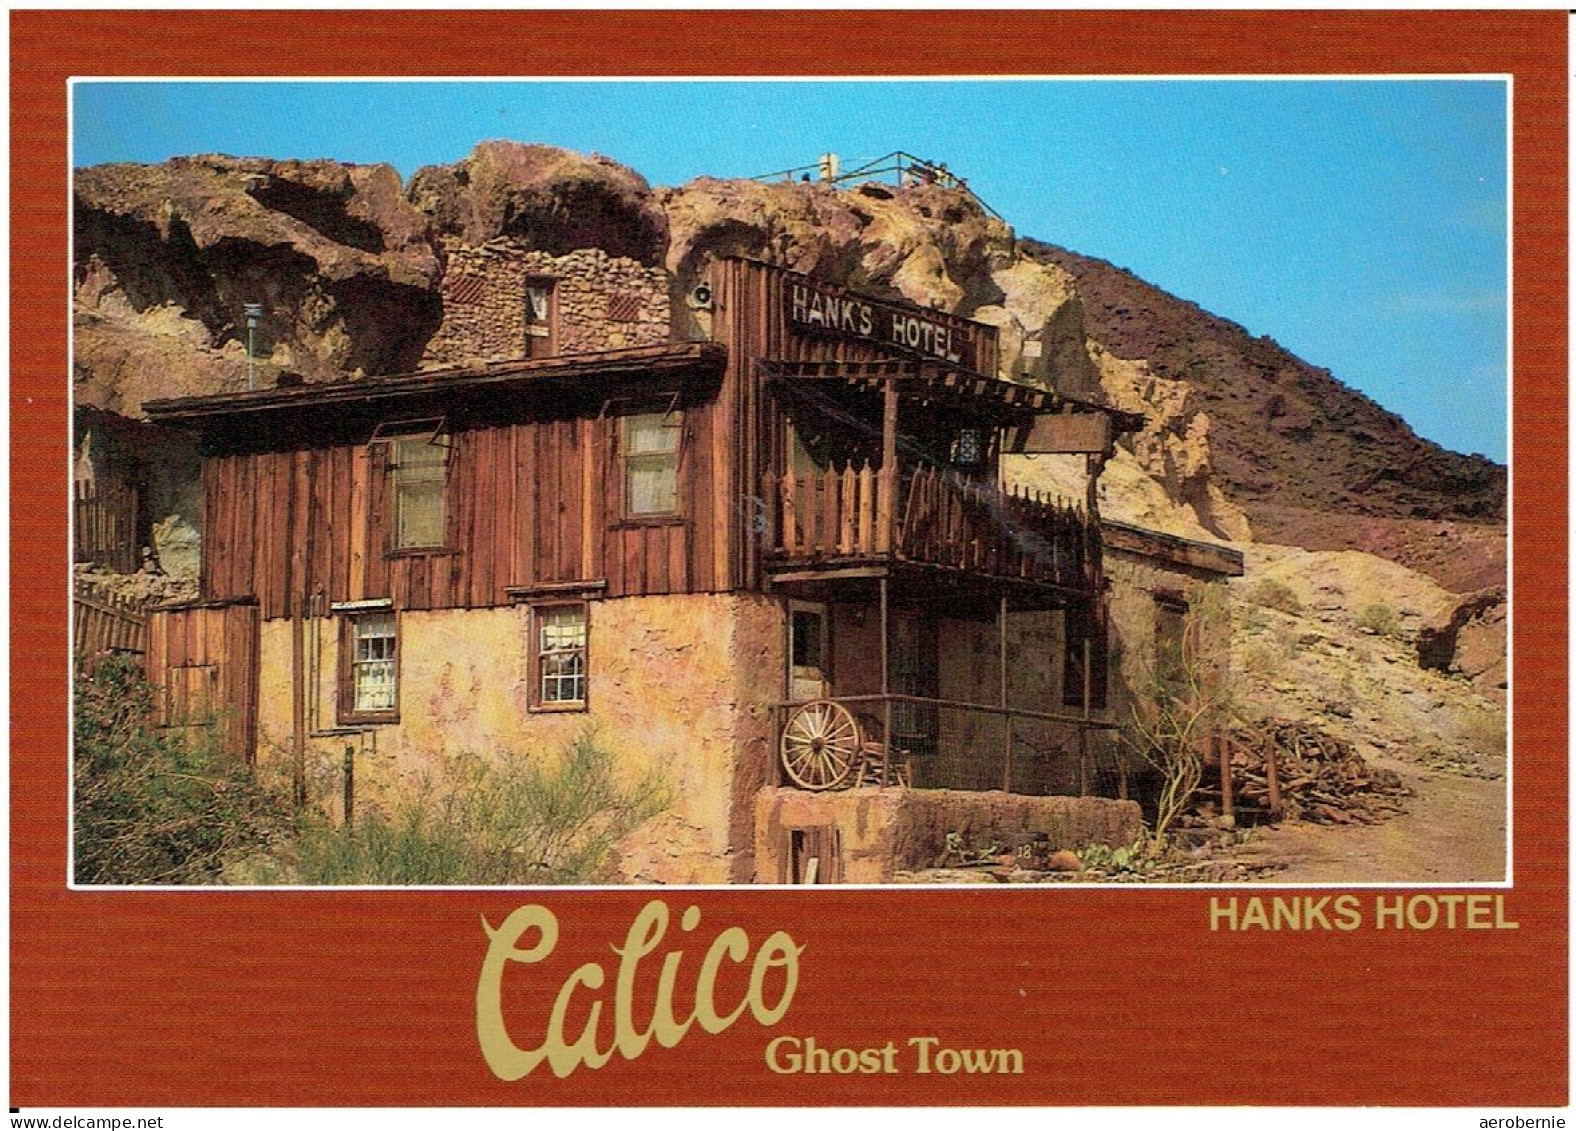 CALICO Ghost Town - Hank's Hotel - San Bernardino